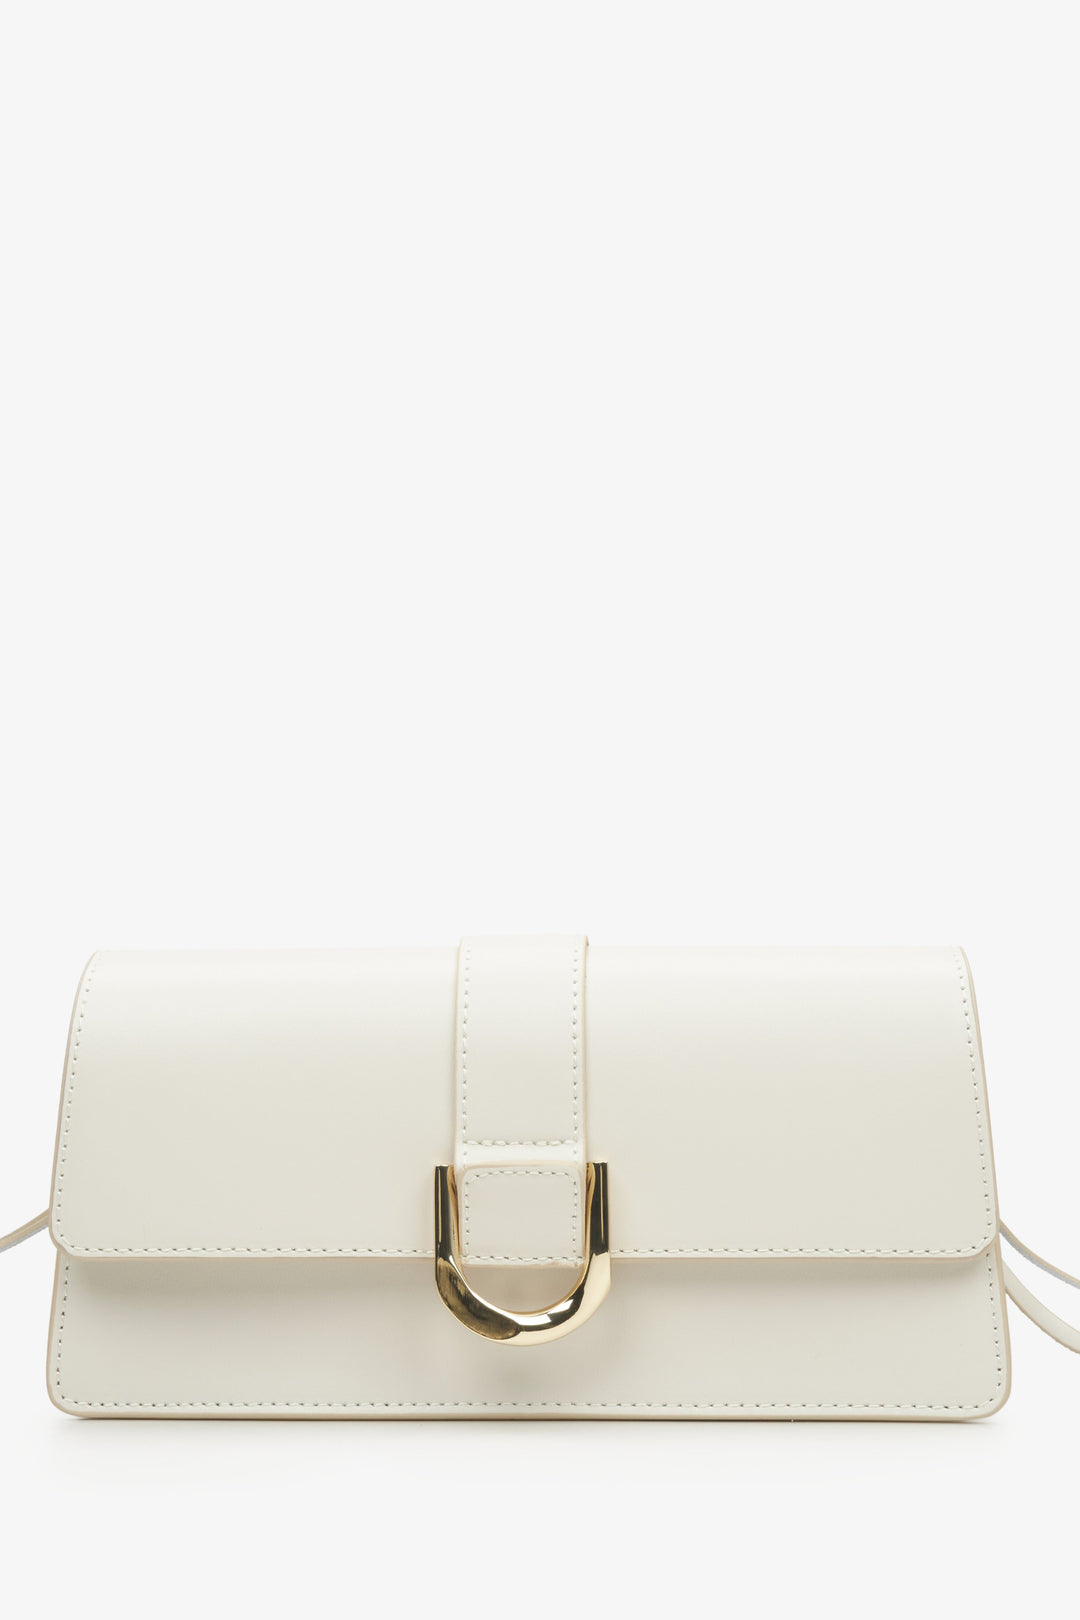 Women's Cream Beige Leather Handbag with Golden Accents Estro ER00114774